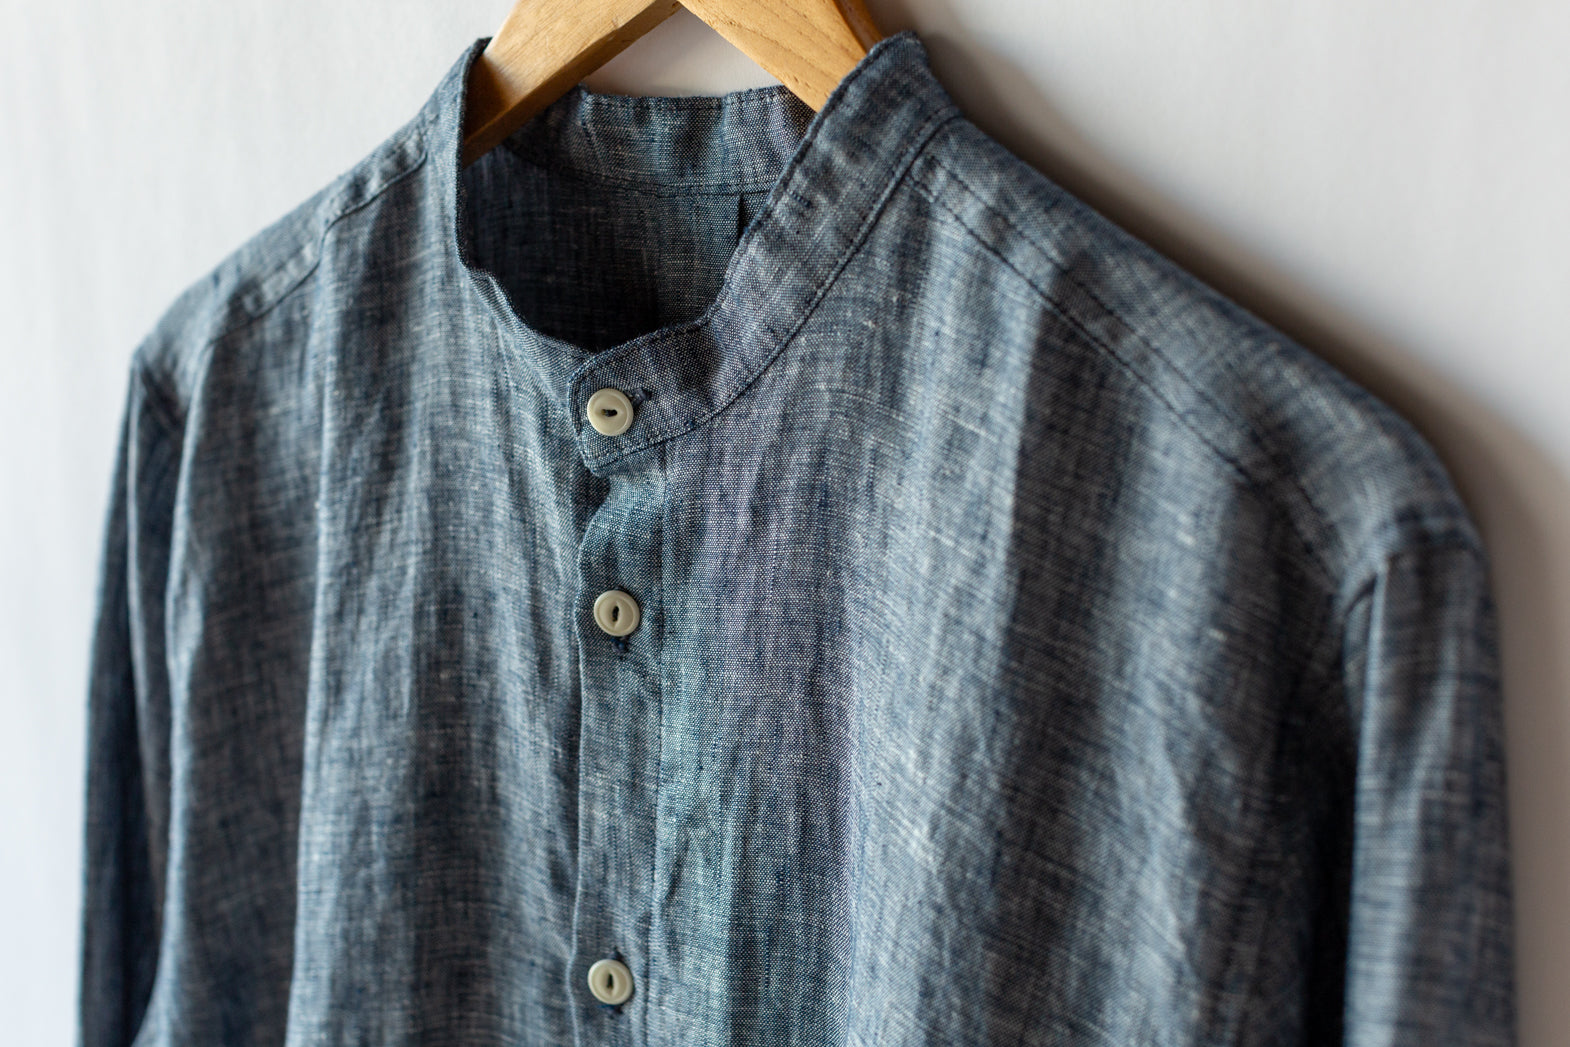 Coyota Shirt - Chambray Denim Linen